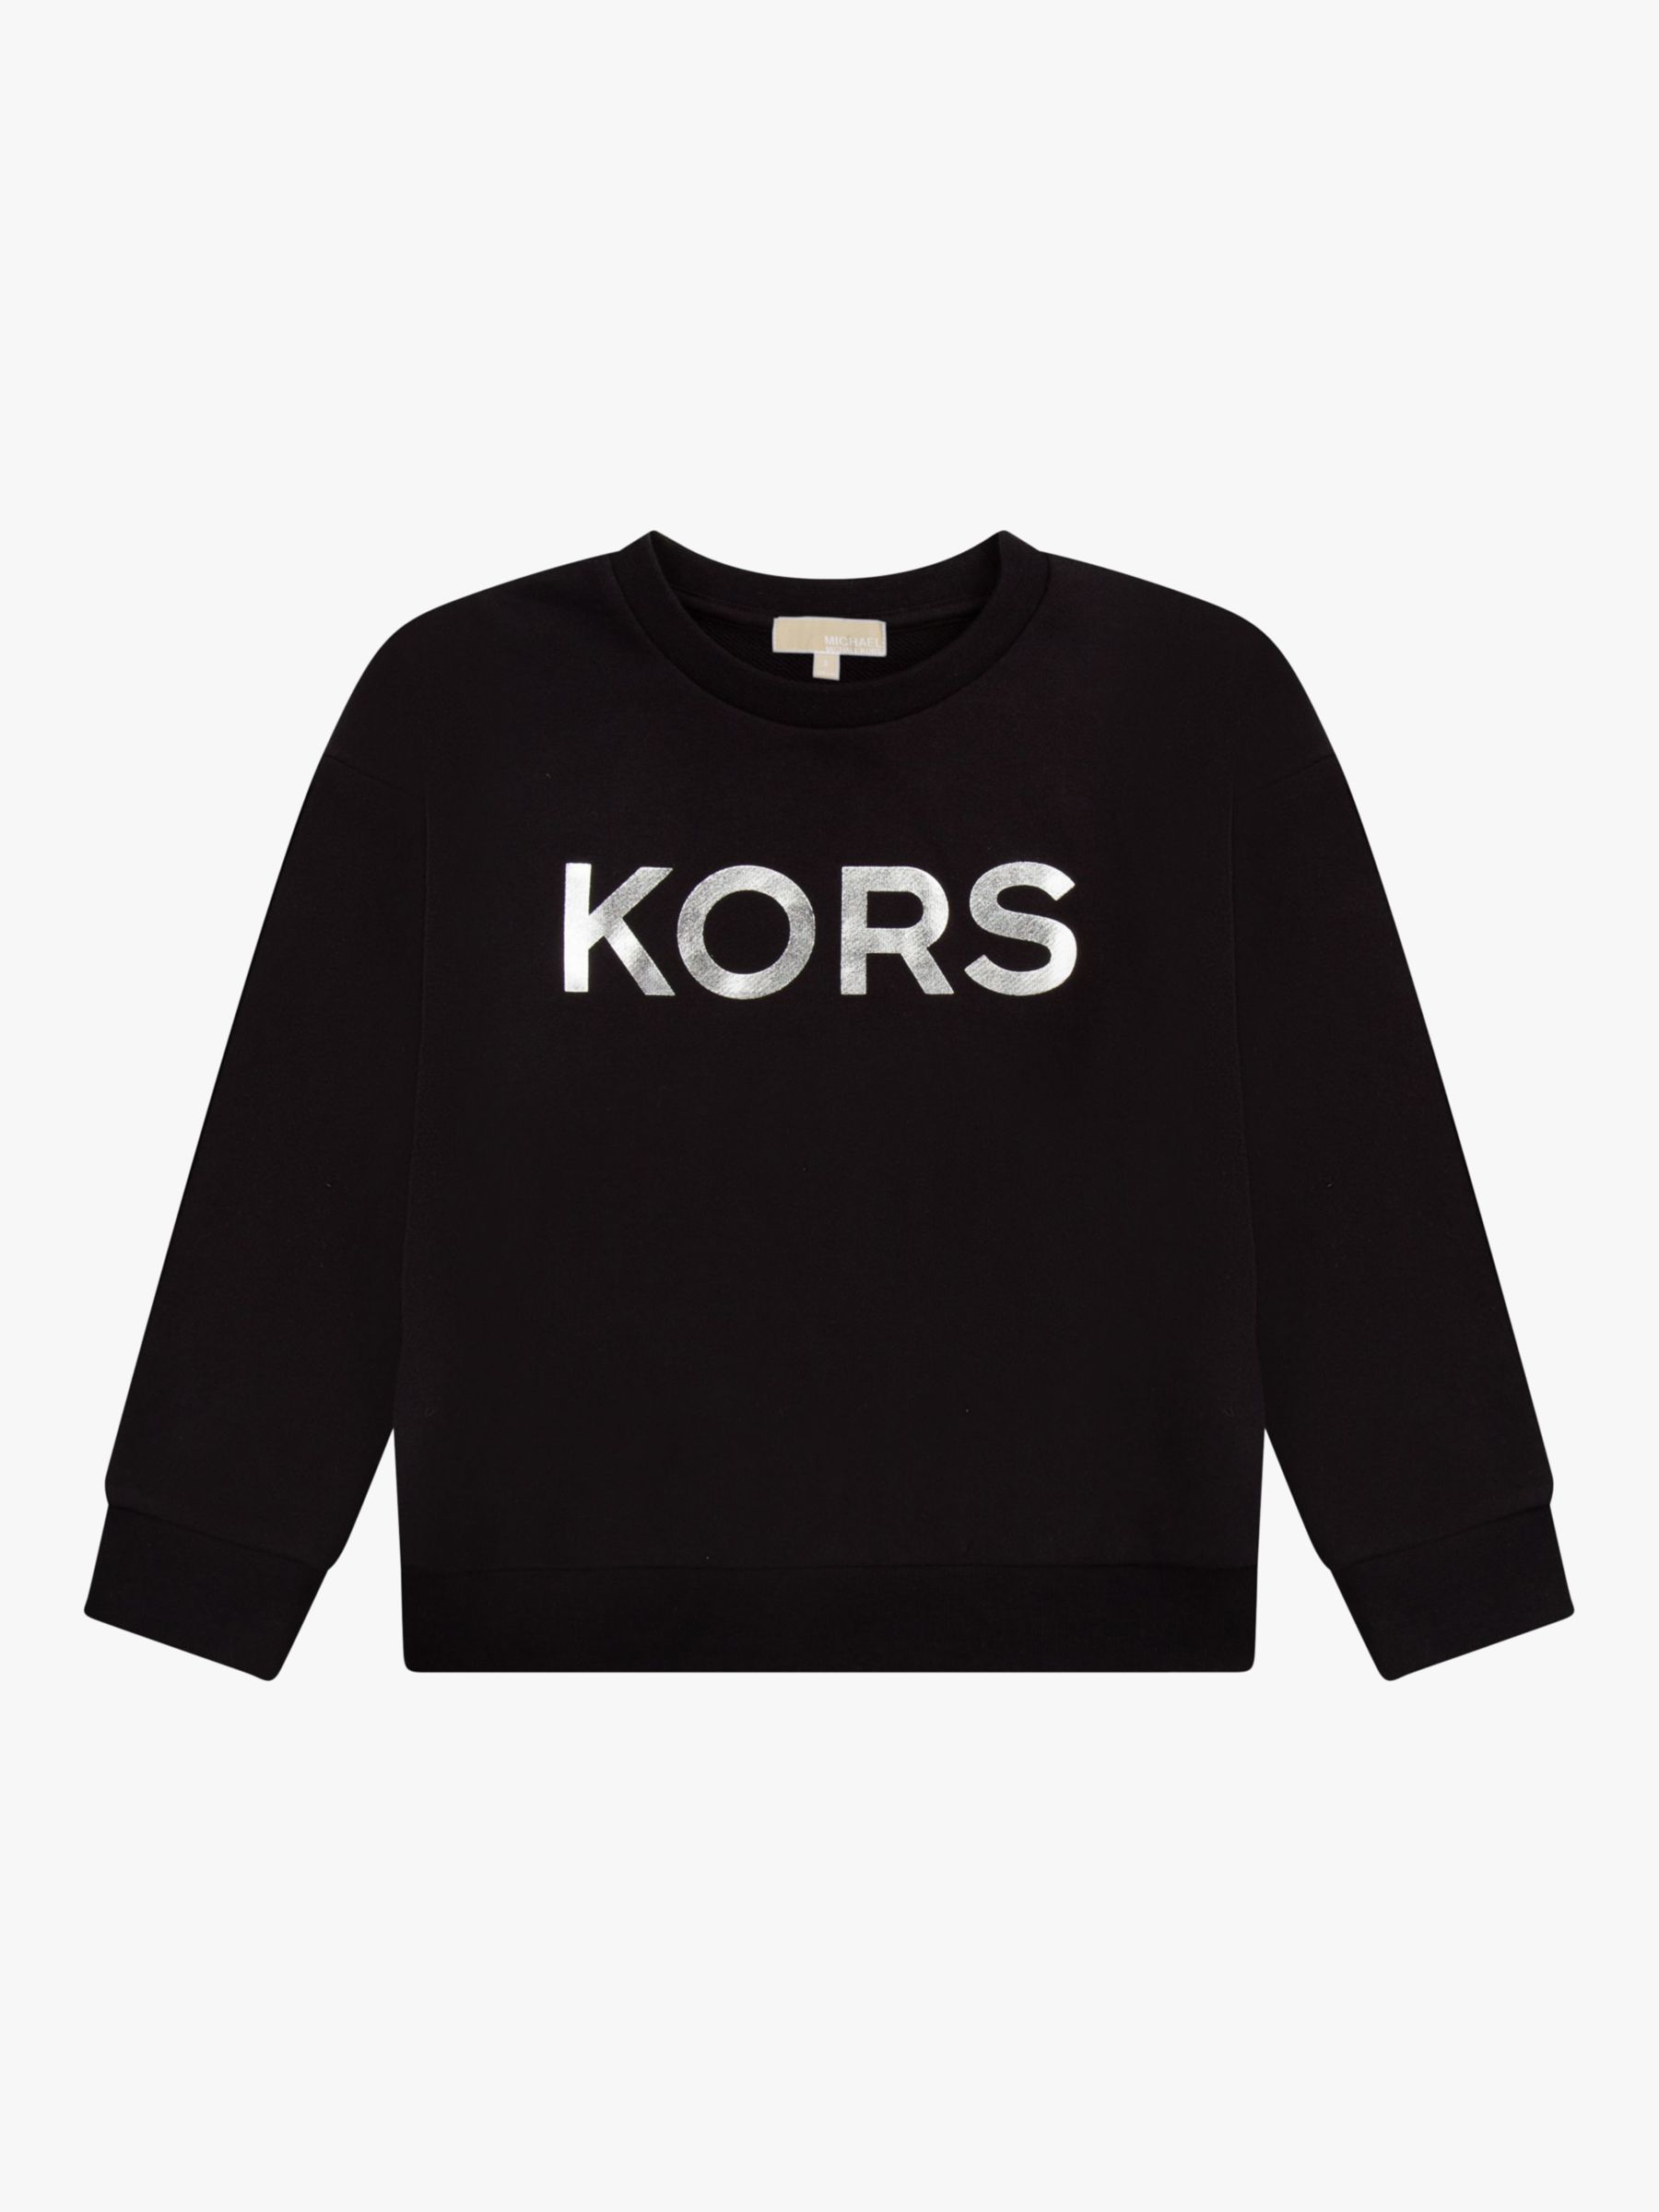 Michael Kors Kids' KORS Metallic Logo Jumper, Black, 4 years